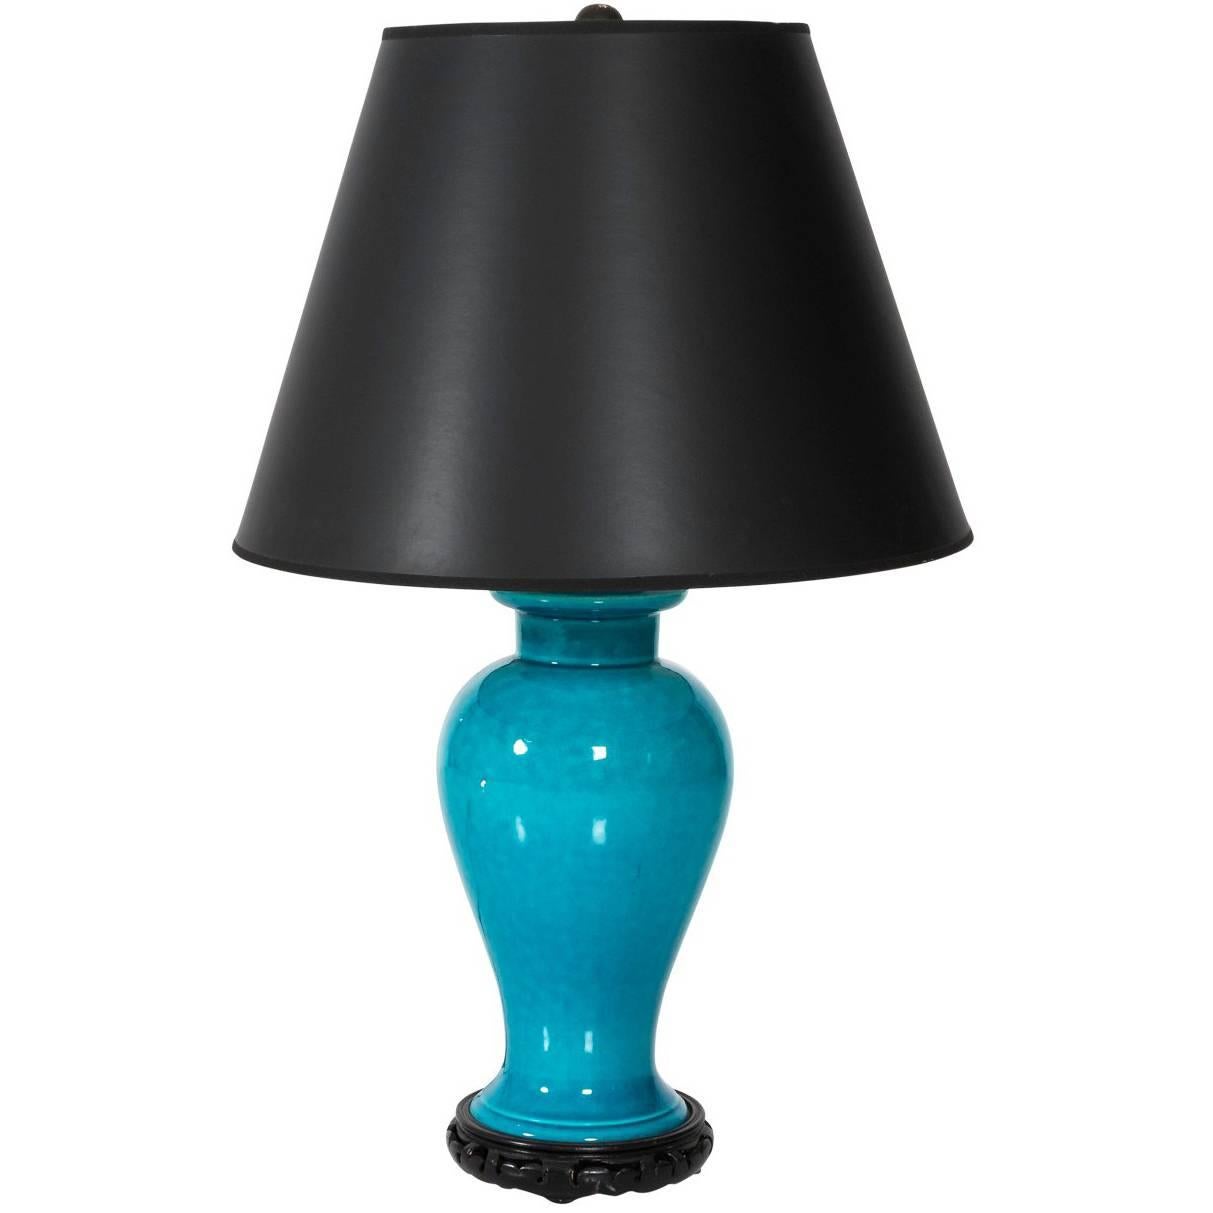 Turquoise Ceramic Lamp For Sale